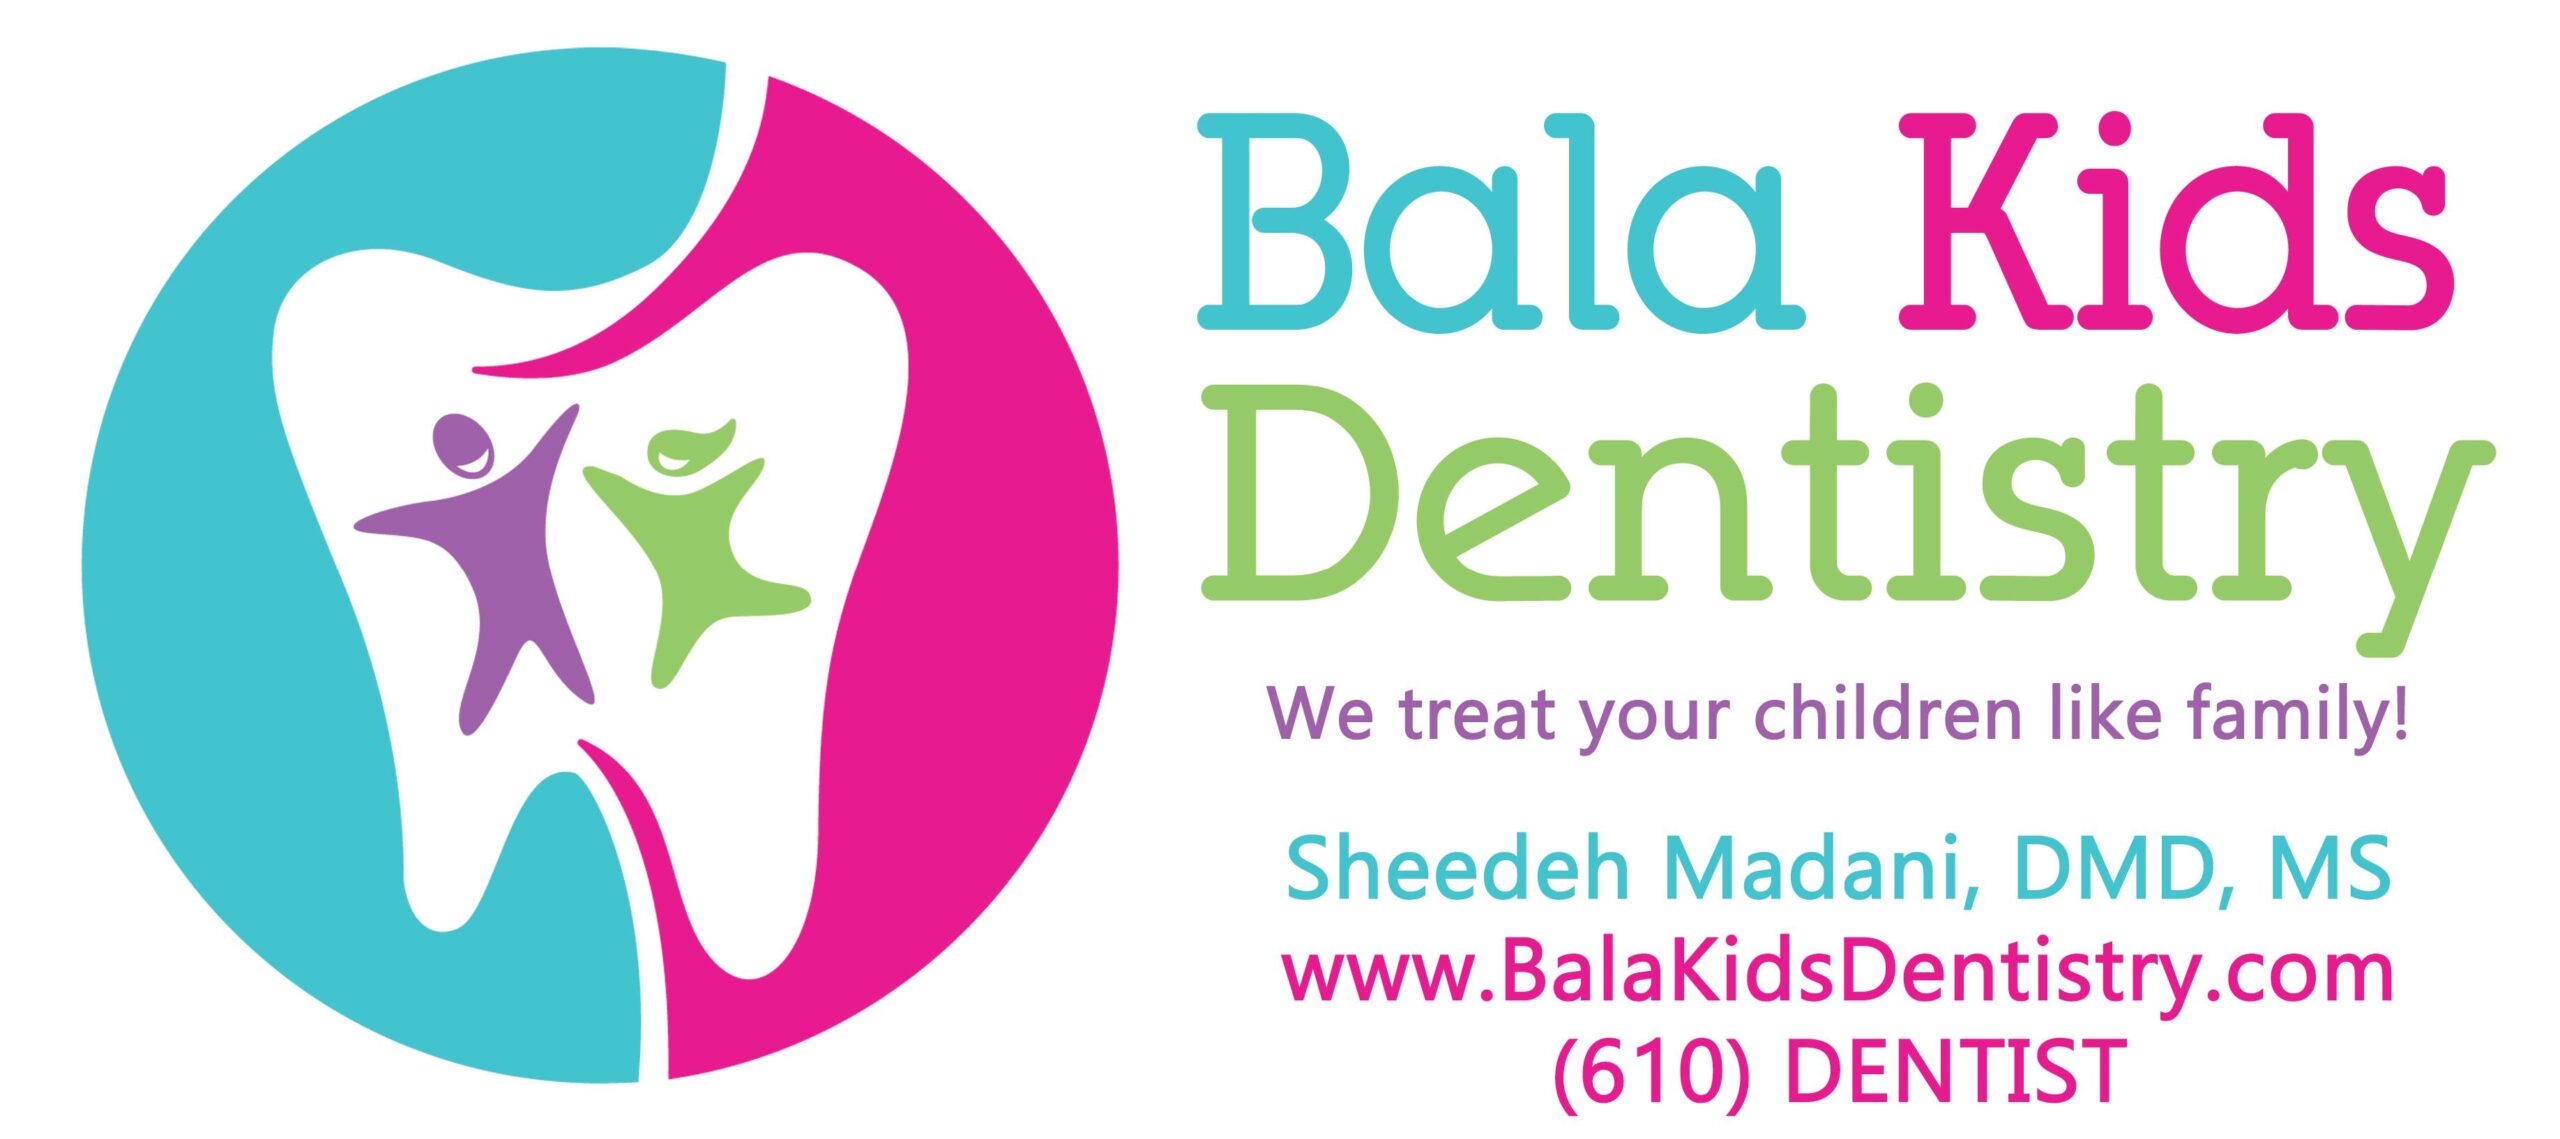 Bala Kids Dentistry